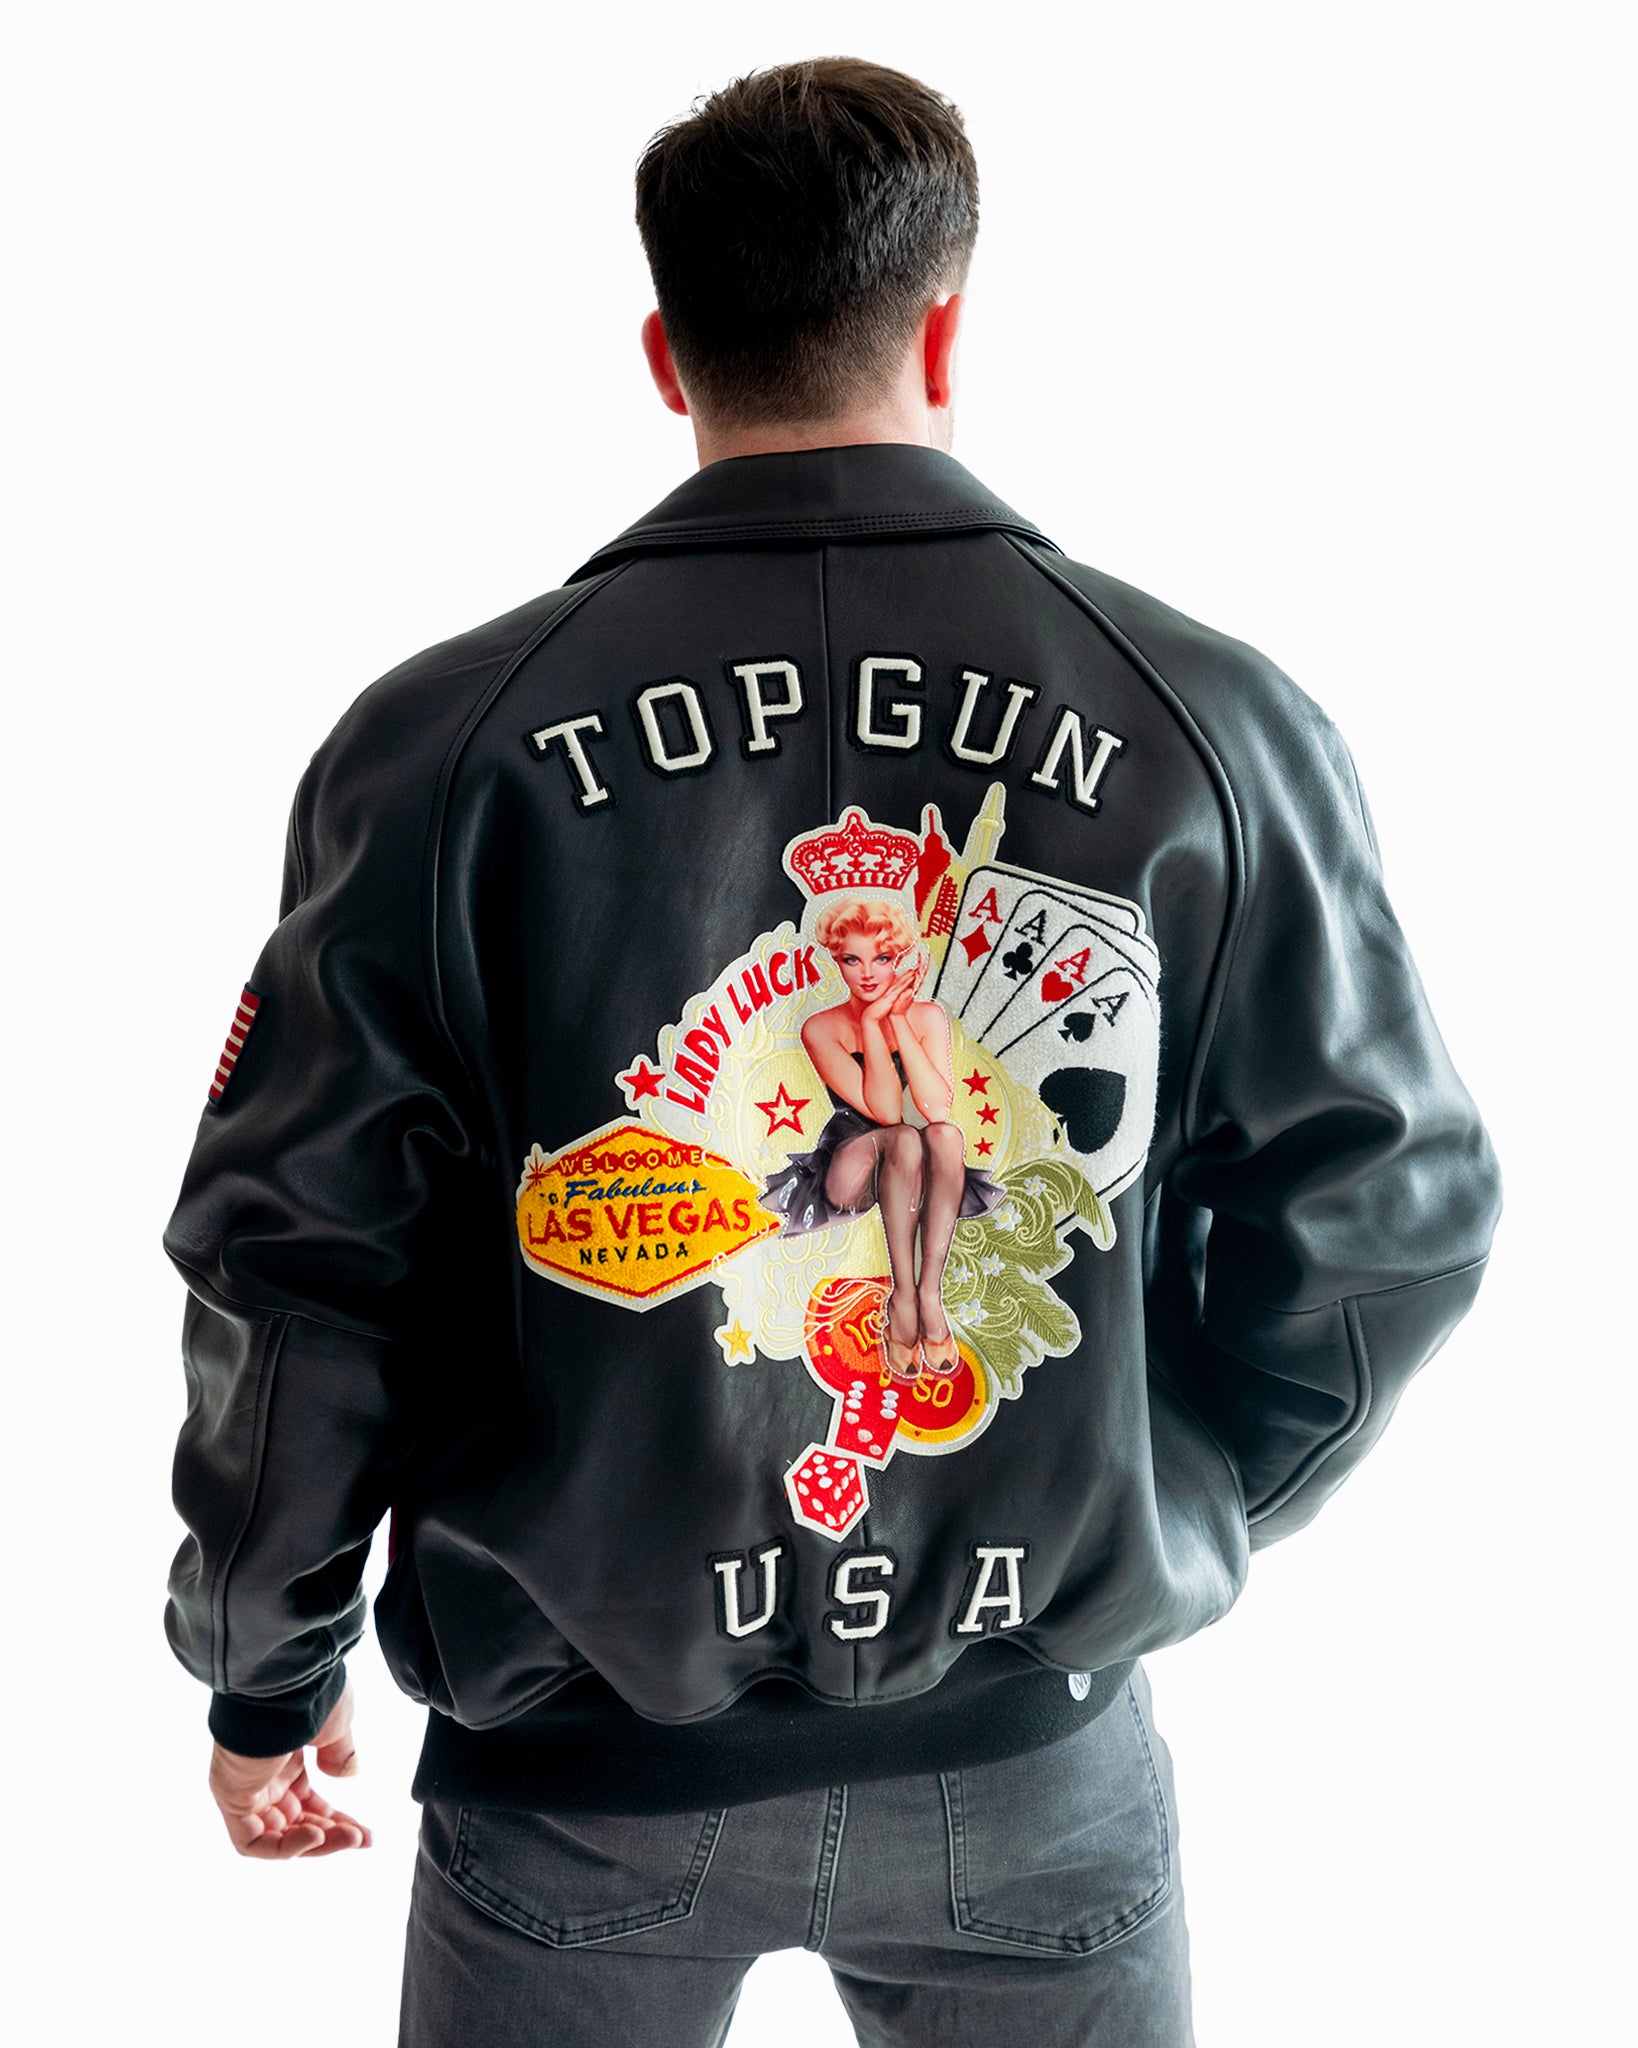 Men\'s Leather Jackets | The Top Gun® Official Store | Men\'s Leather Bomber  Jacket, Flight Jacket, Pilot Jacket, varsity Jacket – Top Gun Store